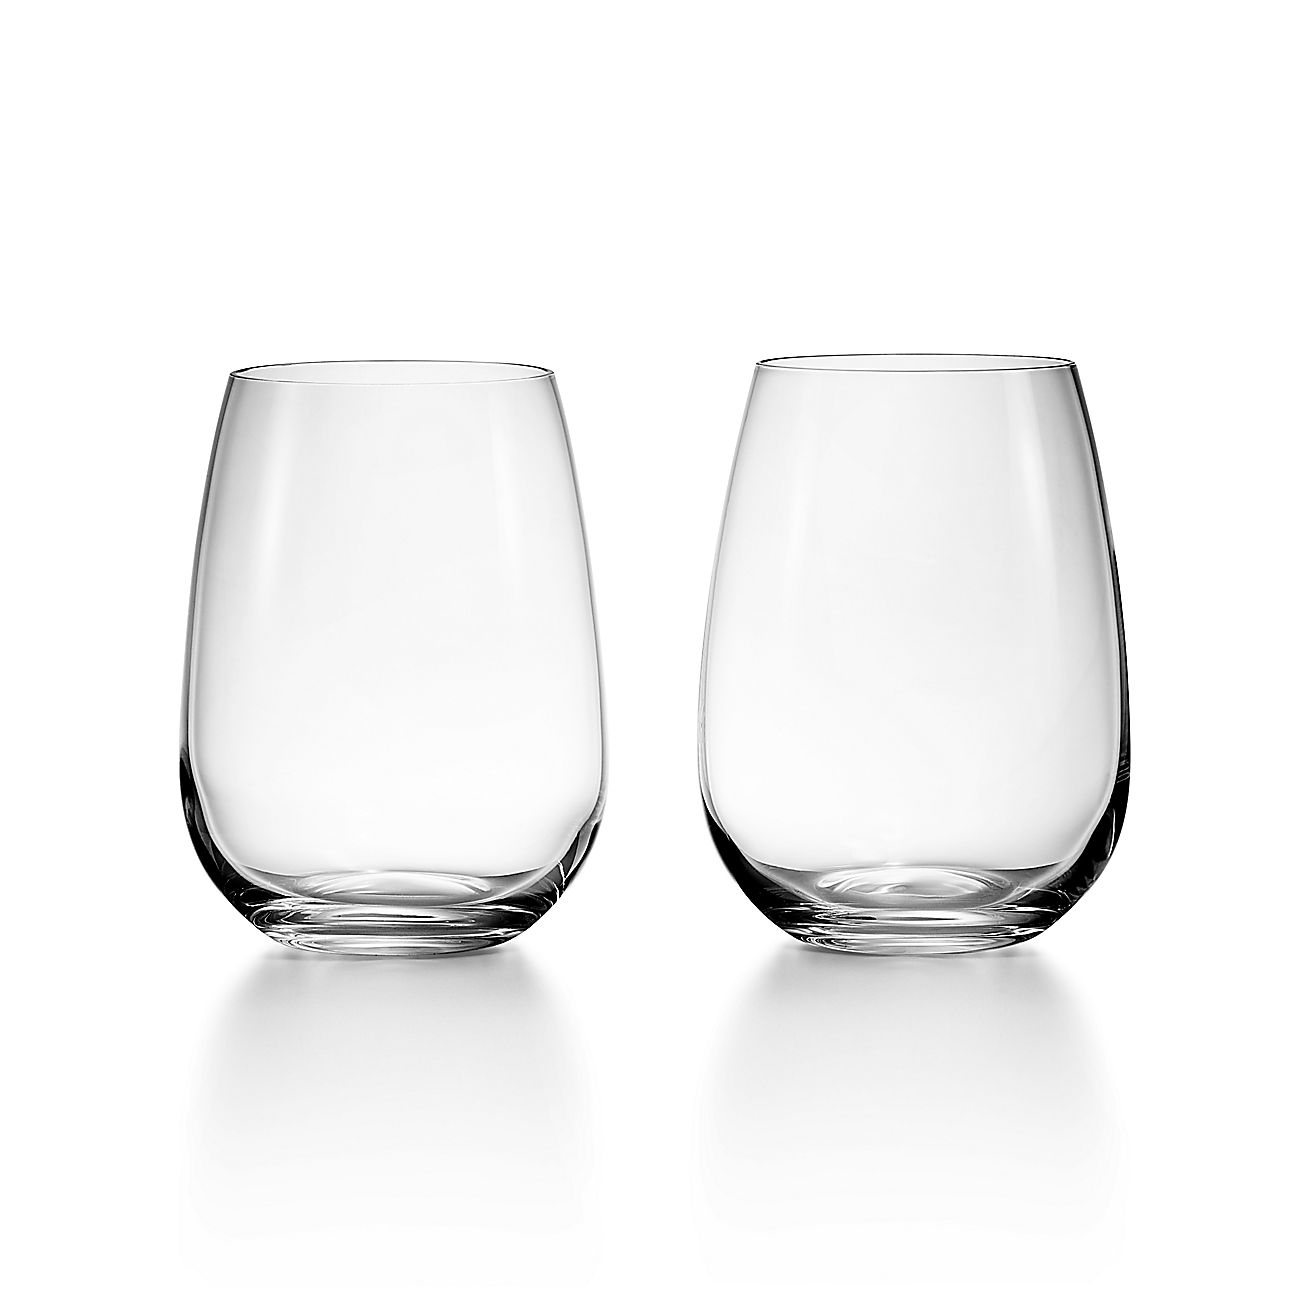 https://media.tiffany.com/is/image/Tiffany/EcomItemL2/tiffany-home-essentialsstemless-white-wine-glasses-72333144_1048387_ED.jpg?&op_usm=2.0,1.0,6.0&$cropN=0.1,0.1,0.8,0.8&defaultImage=NoImageAvailableInternal&